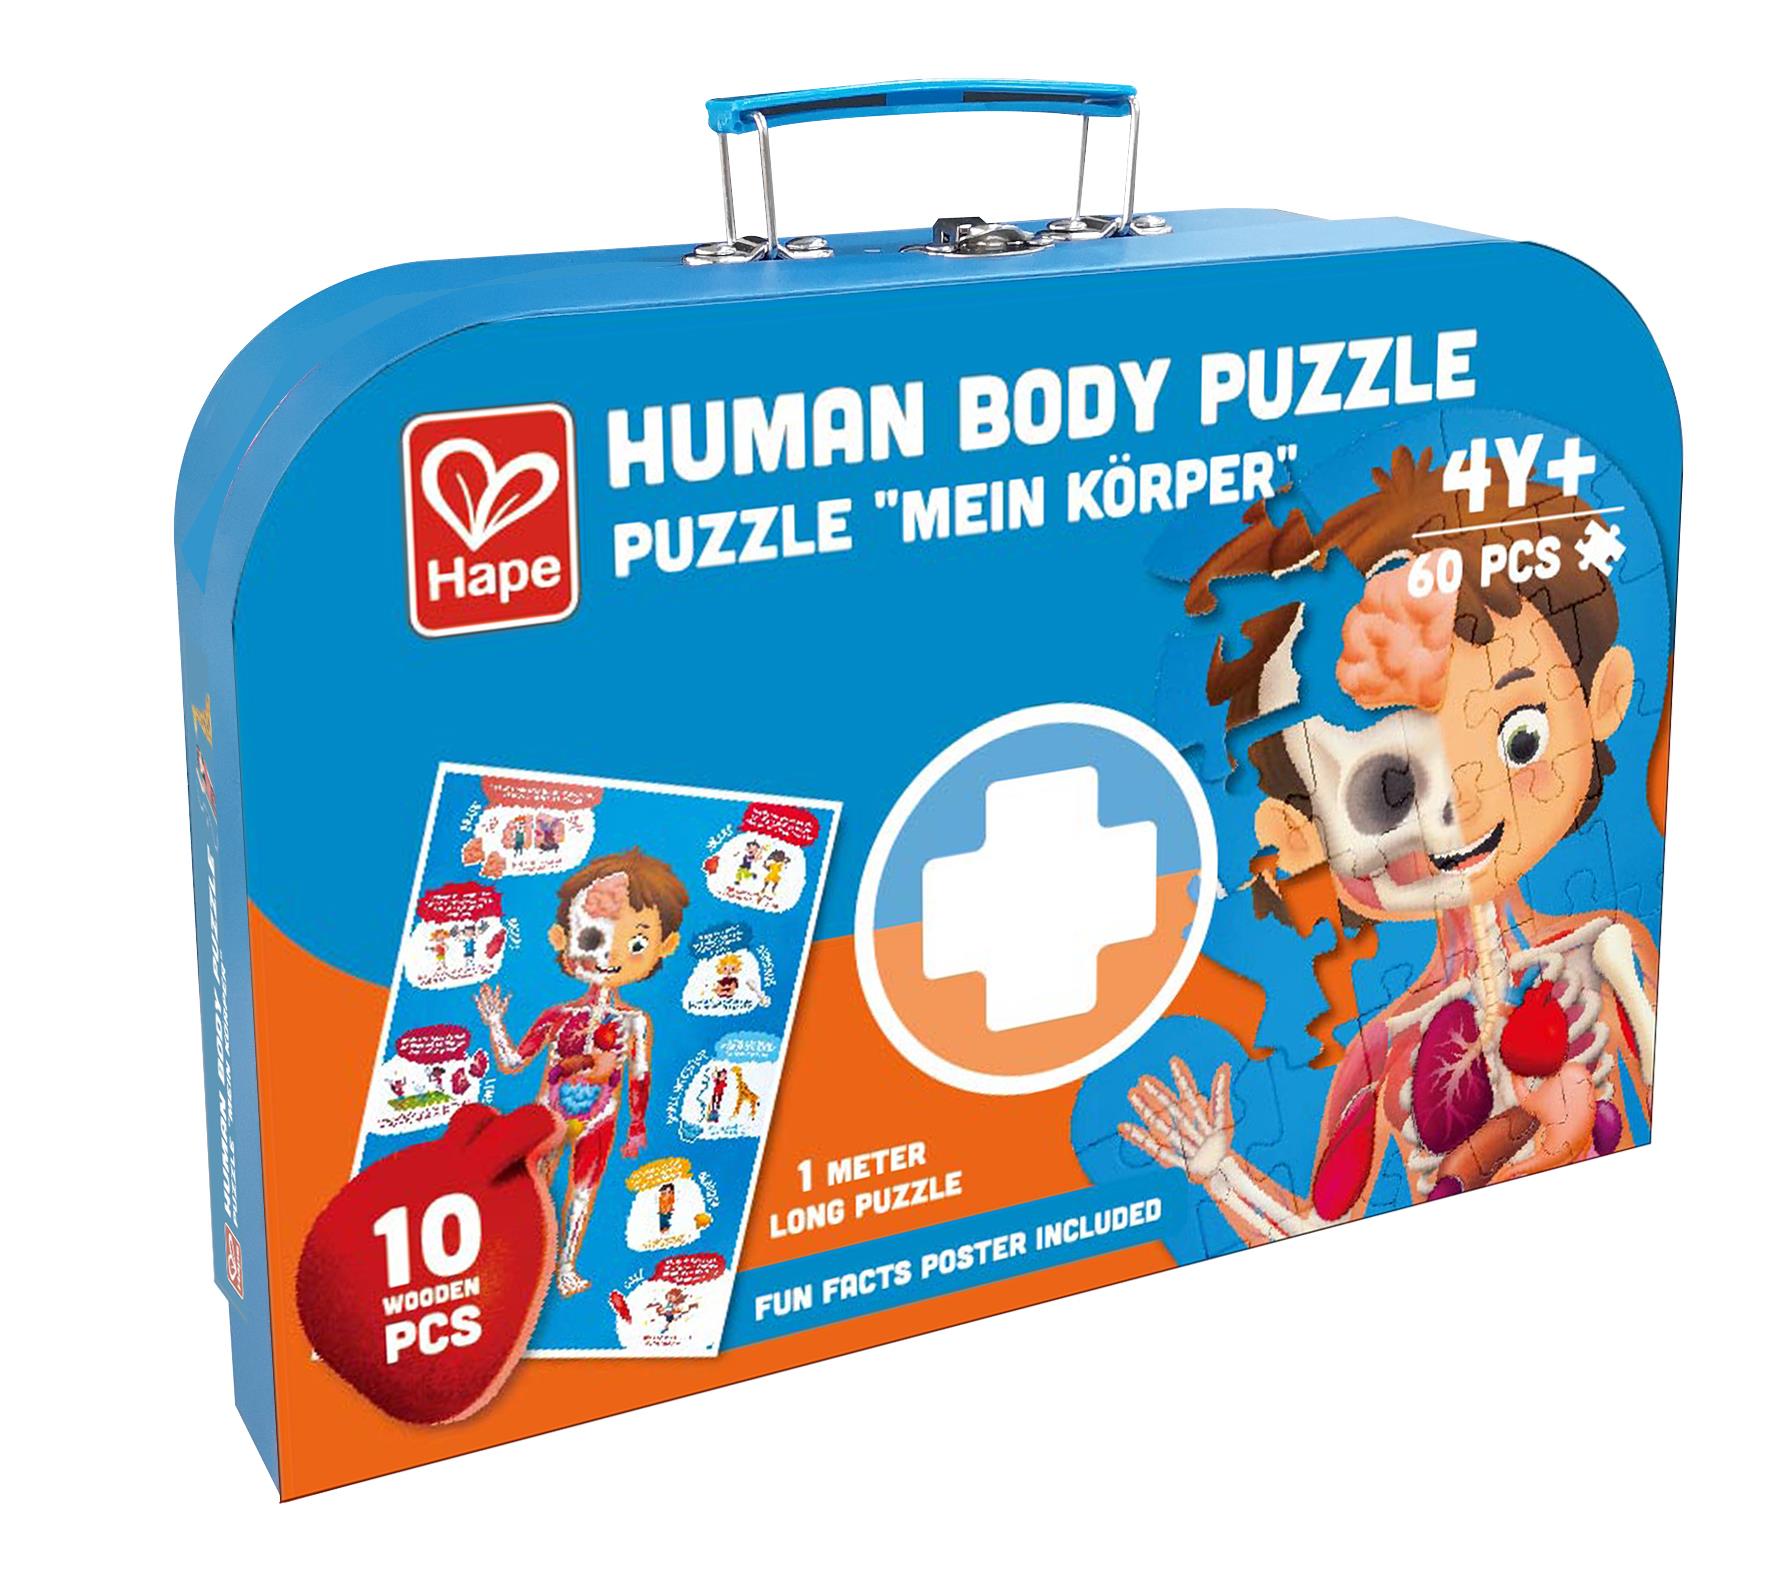 Hape Human Body Puzzle